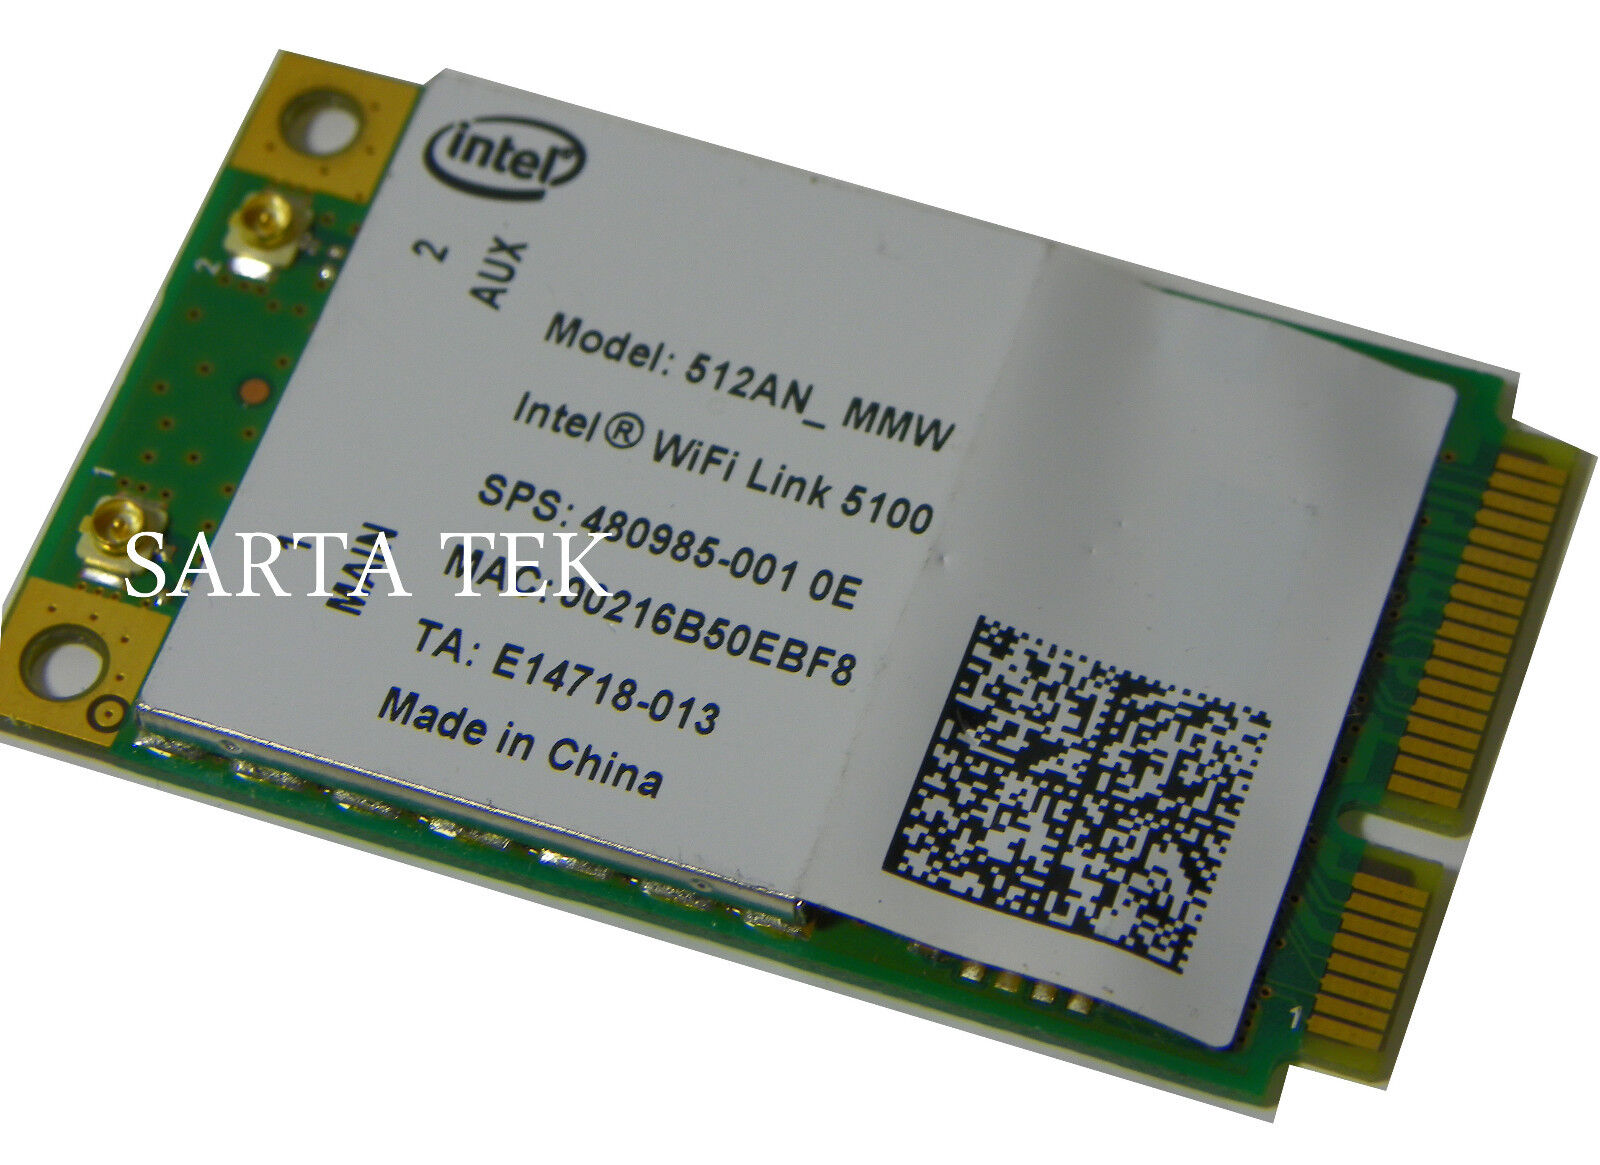 Original HP 480985-001 Intel WiFi Link 5100 512AN_MMW Dual Band a/g/n PCIe full